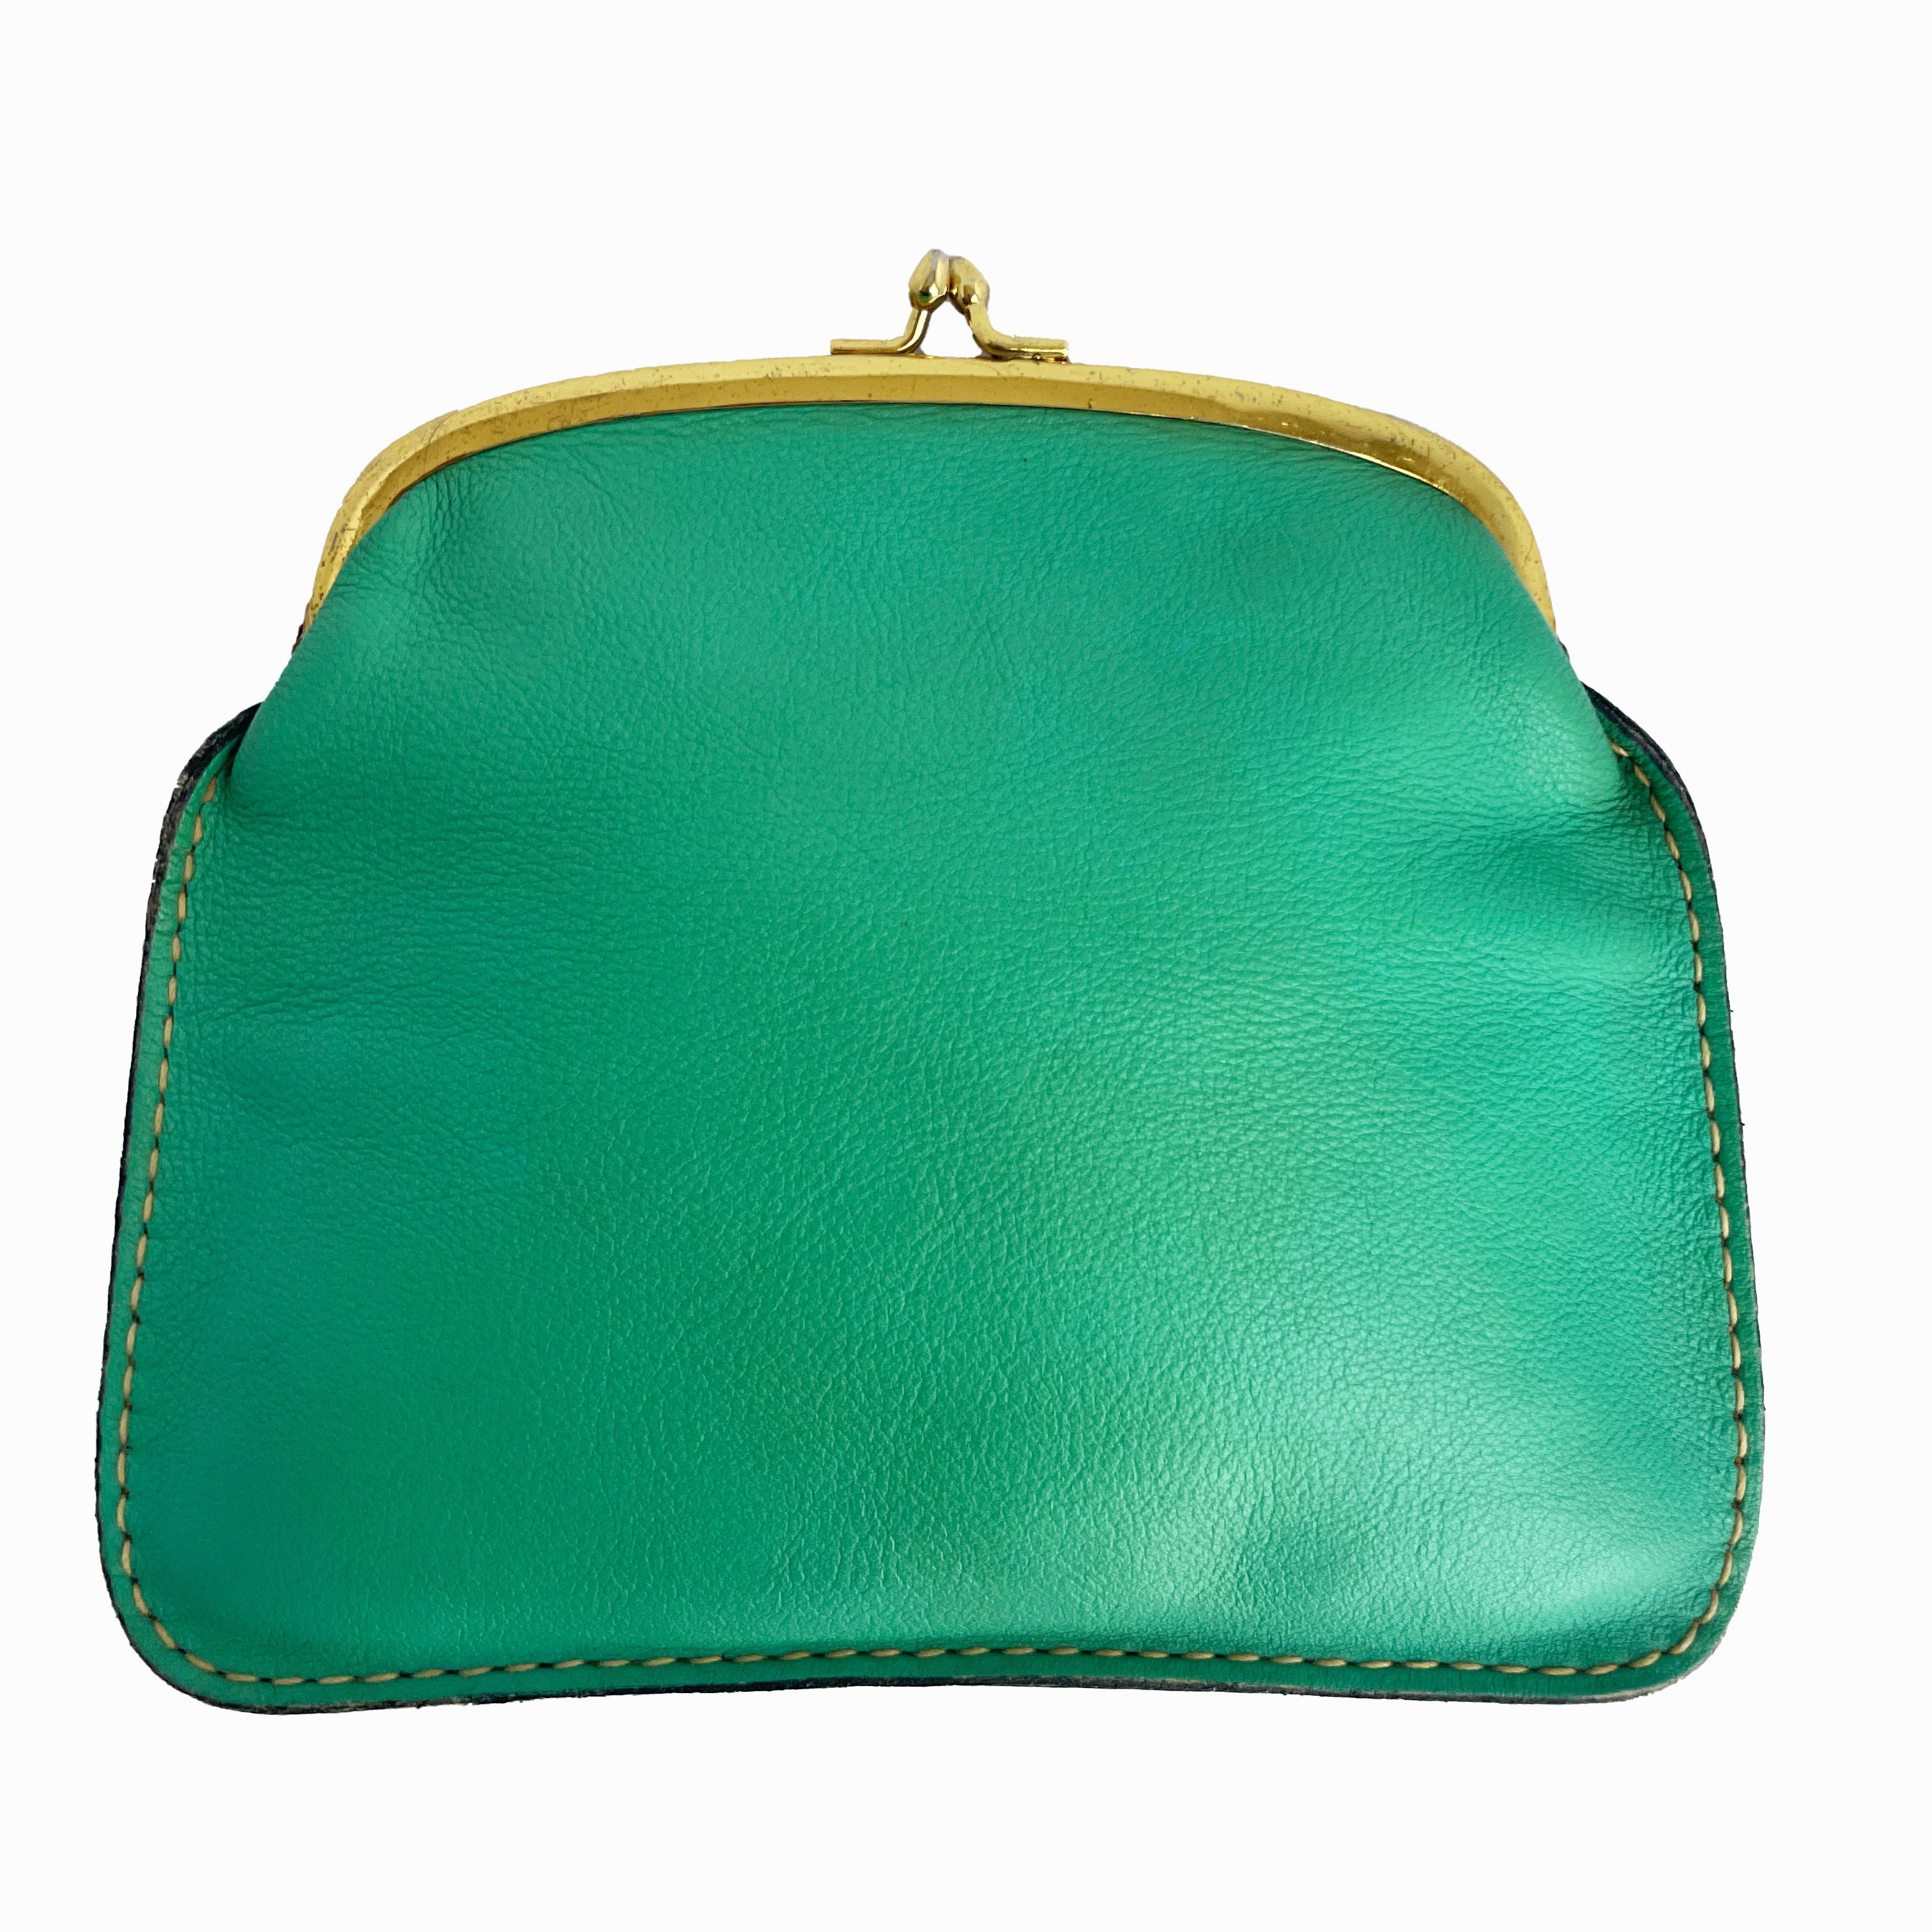 Bonnie Cashin for Coach Foldover Purse 60s Cashin Carry Mint Green Leather Rare For Sale 4